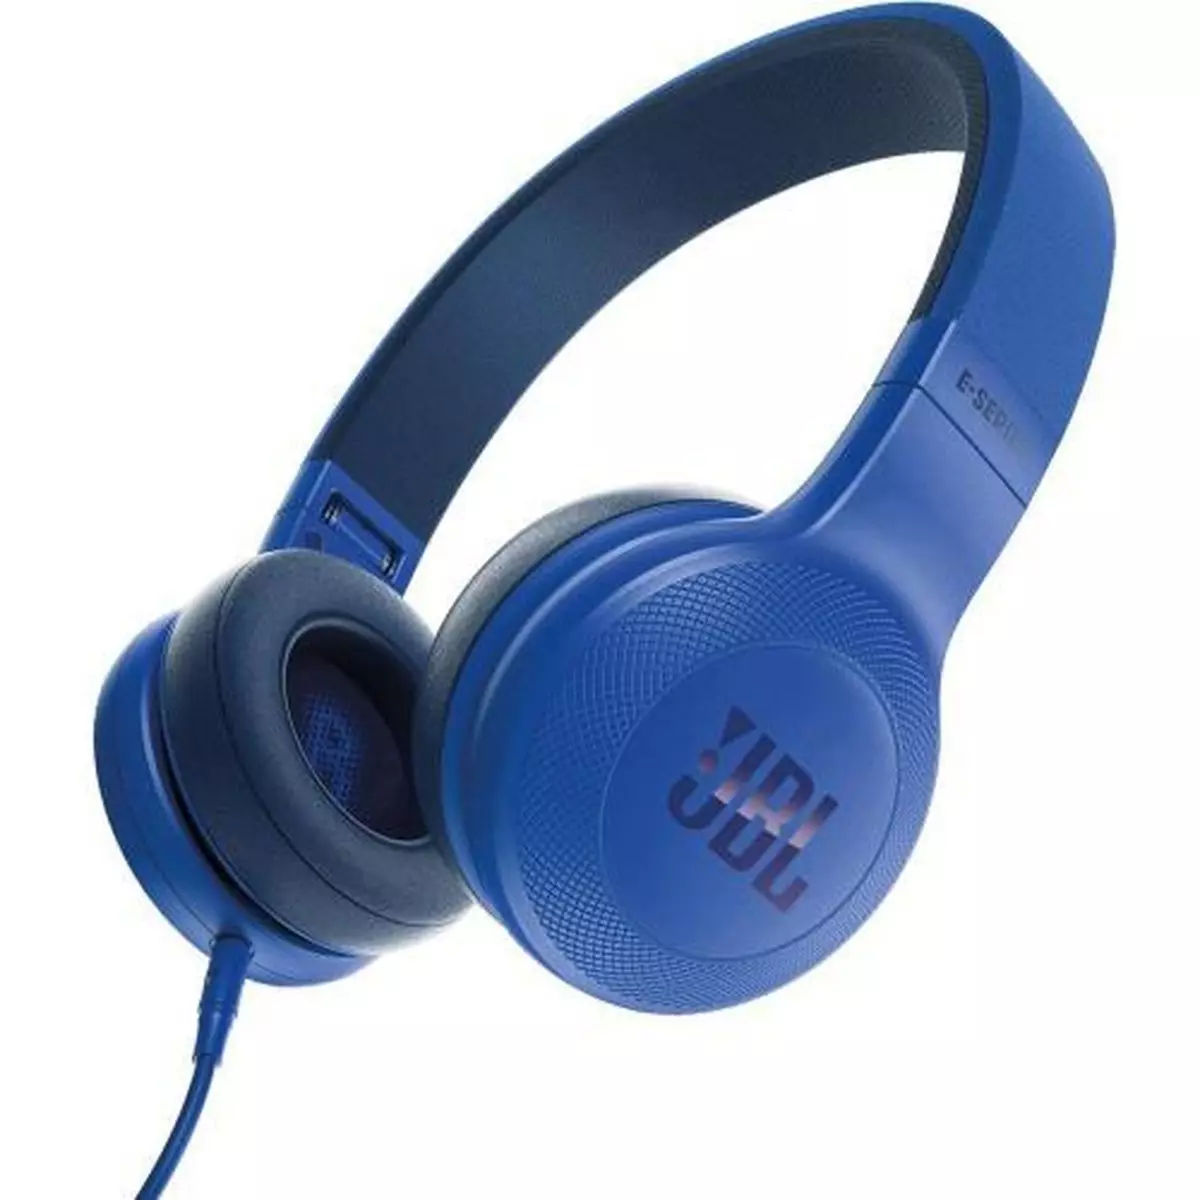 JBL Casque audio filaire - Bleu - E35